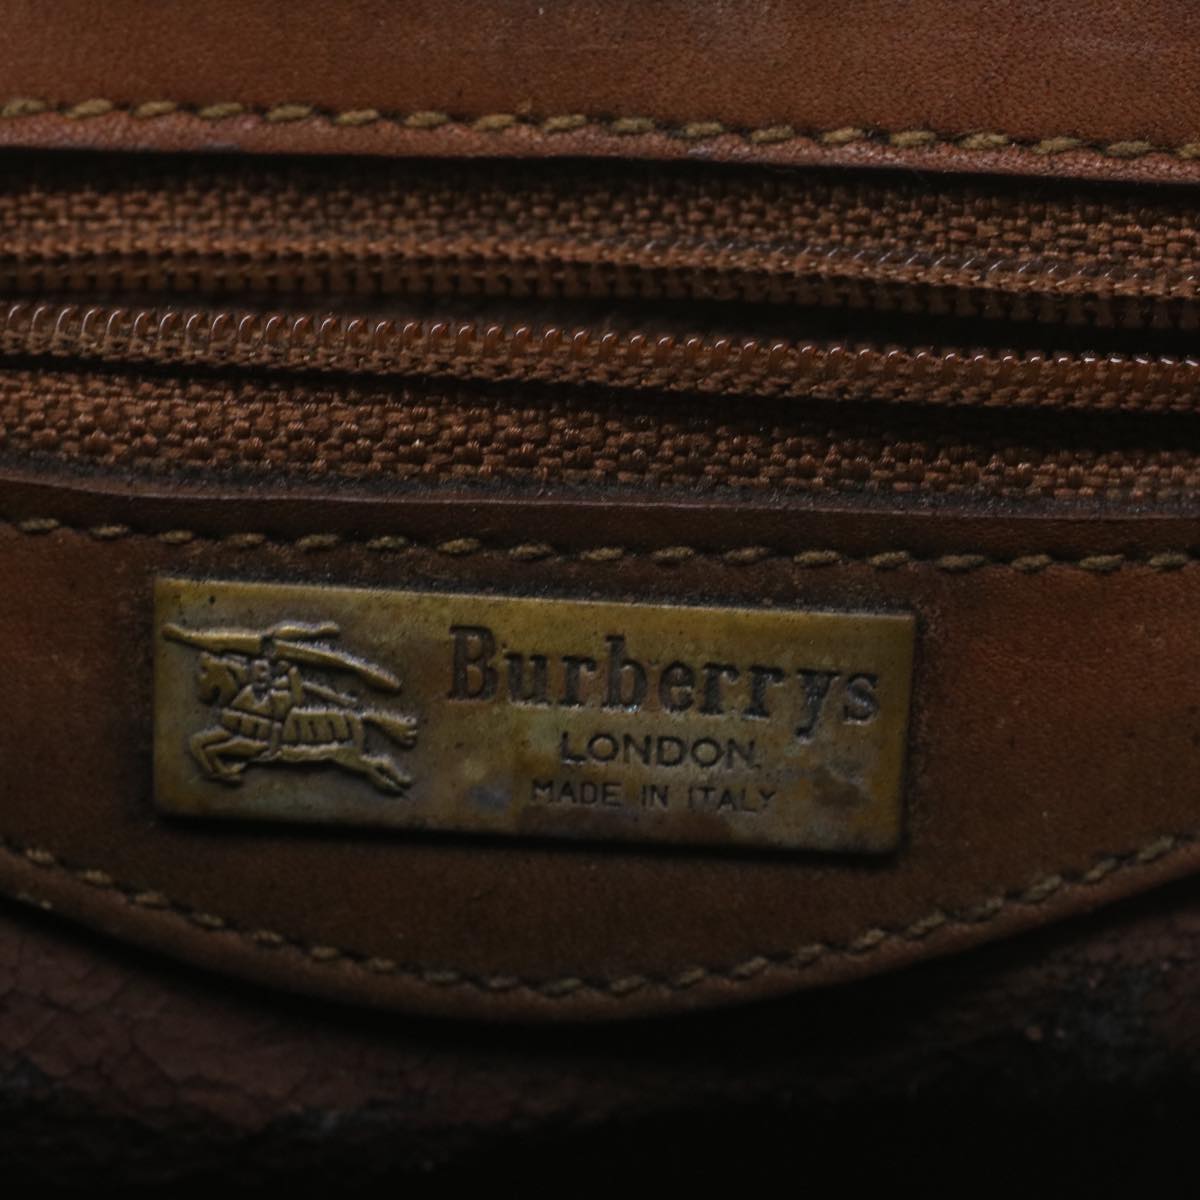 Burberrys Nova Check Shoulder Bag Canvas Leather Brown Auth bs8988